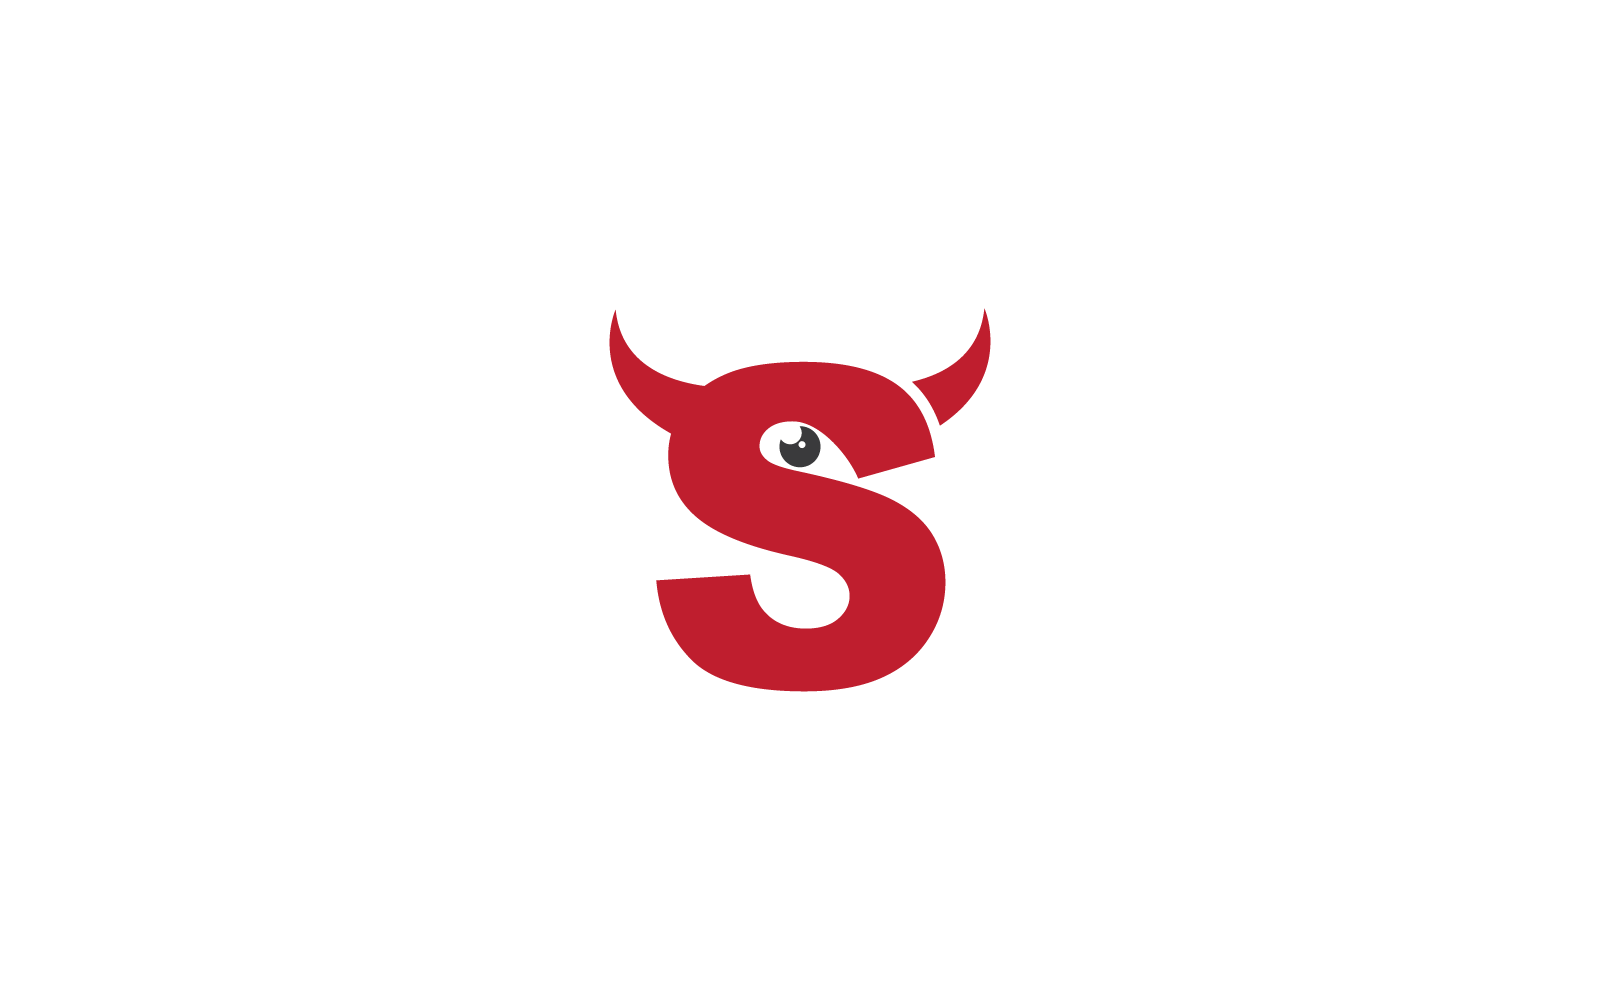 S initial letter with devil horn logo vector design